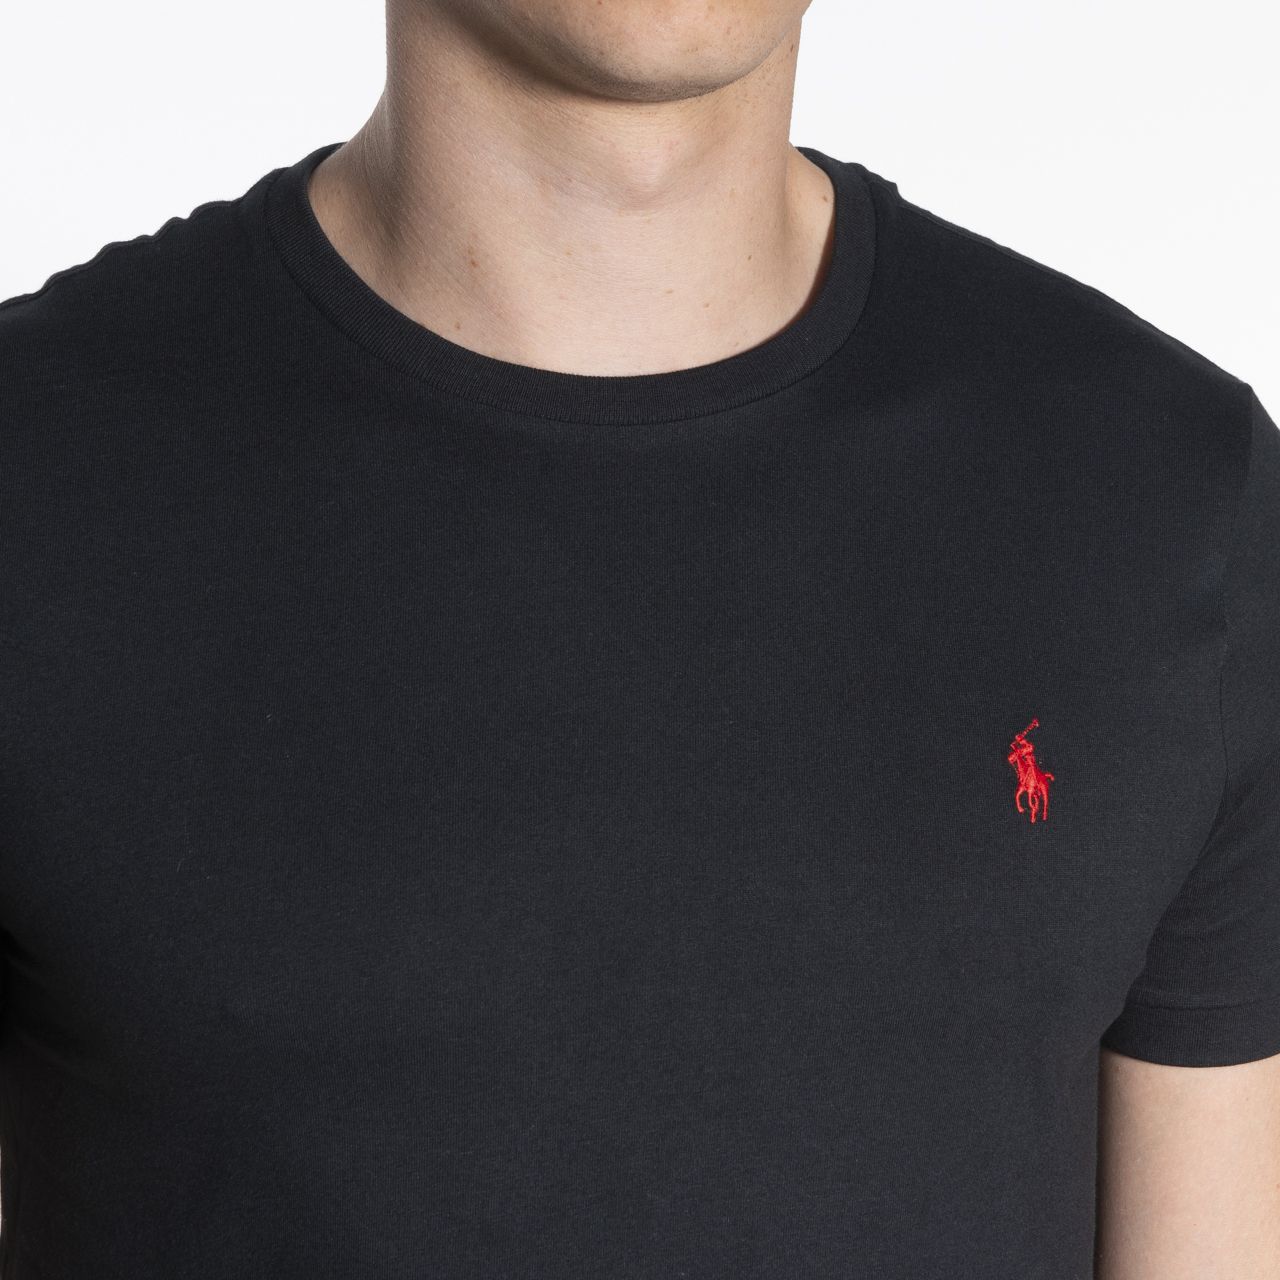 Polo Ralph Lauren Custom Slim fit T-shirt KM Zwart 047456-002-L